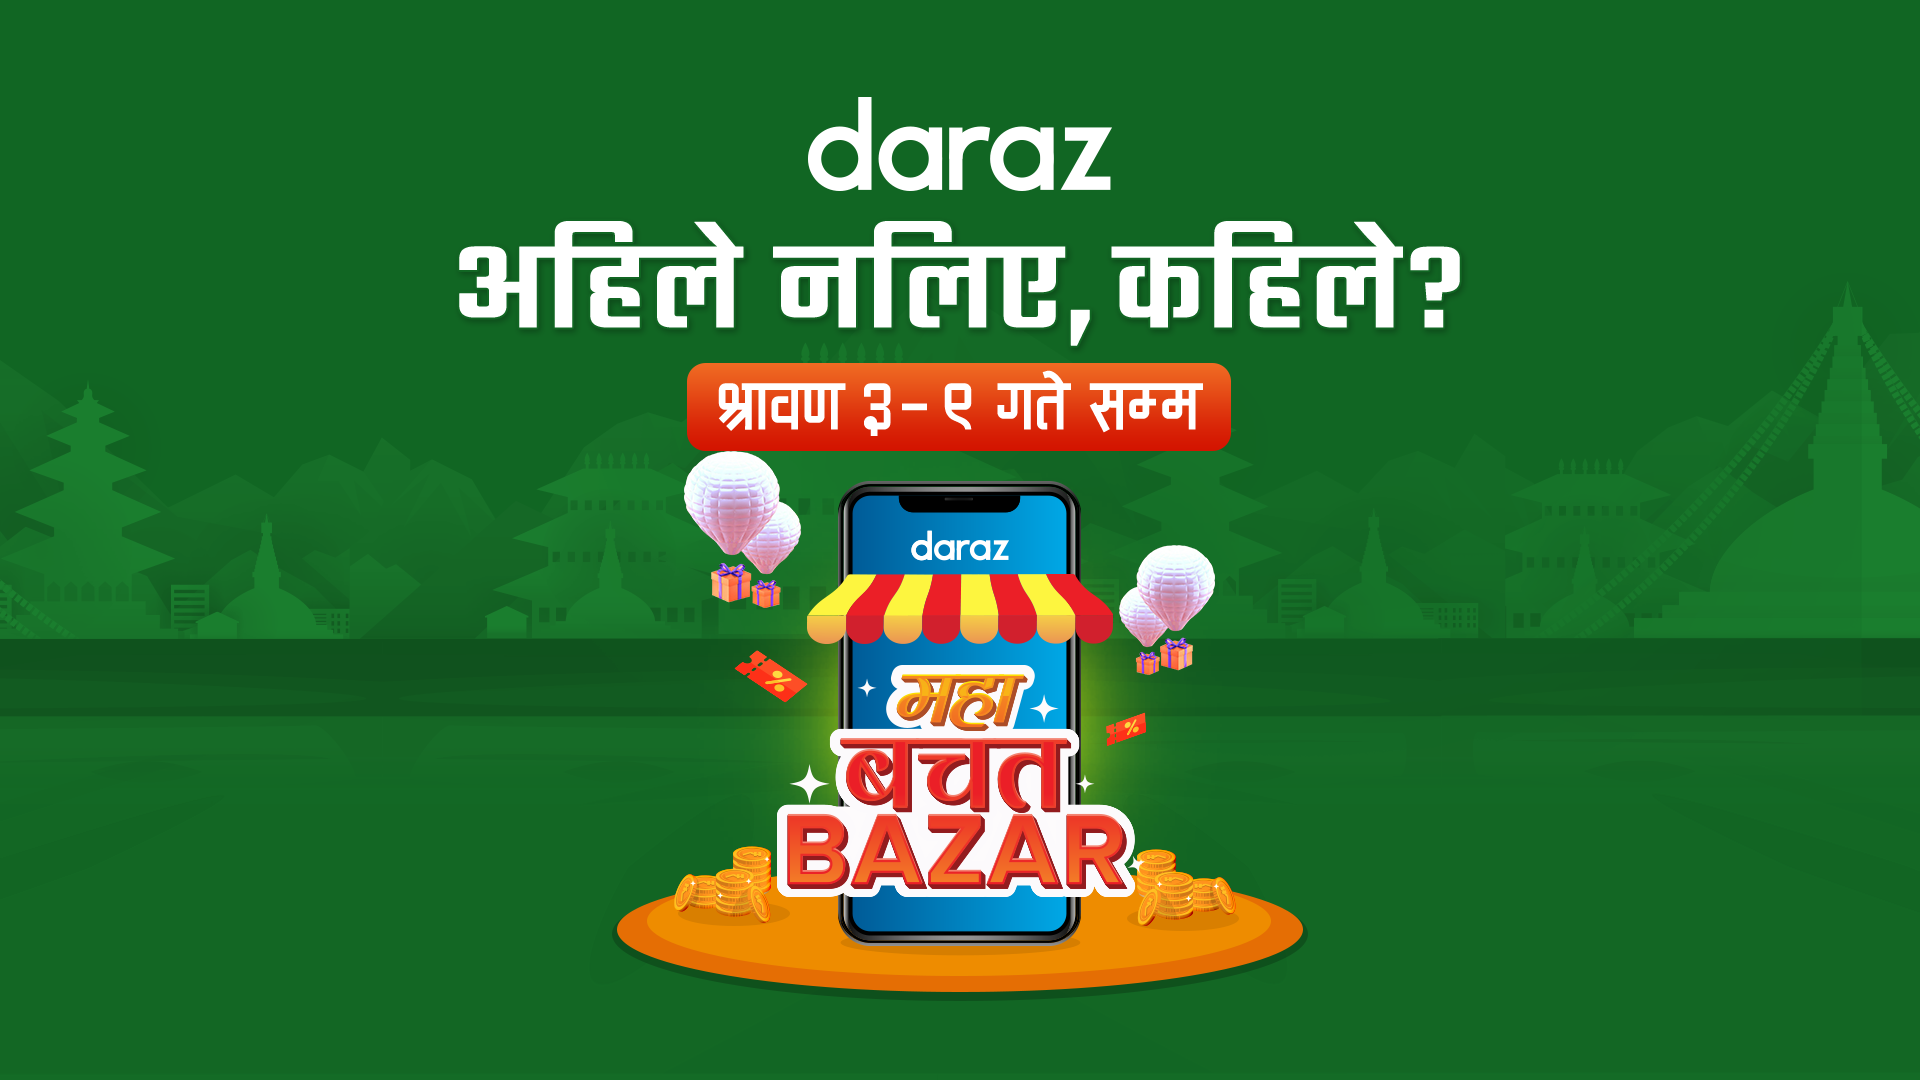 Daraz to provide discounts on Mahabachat Bazar